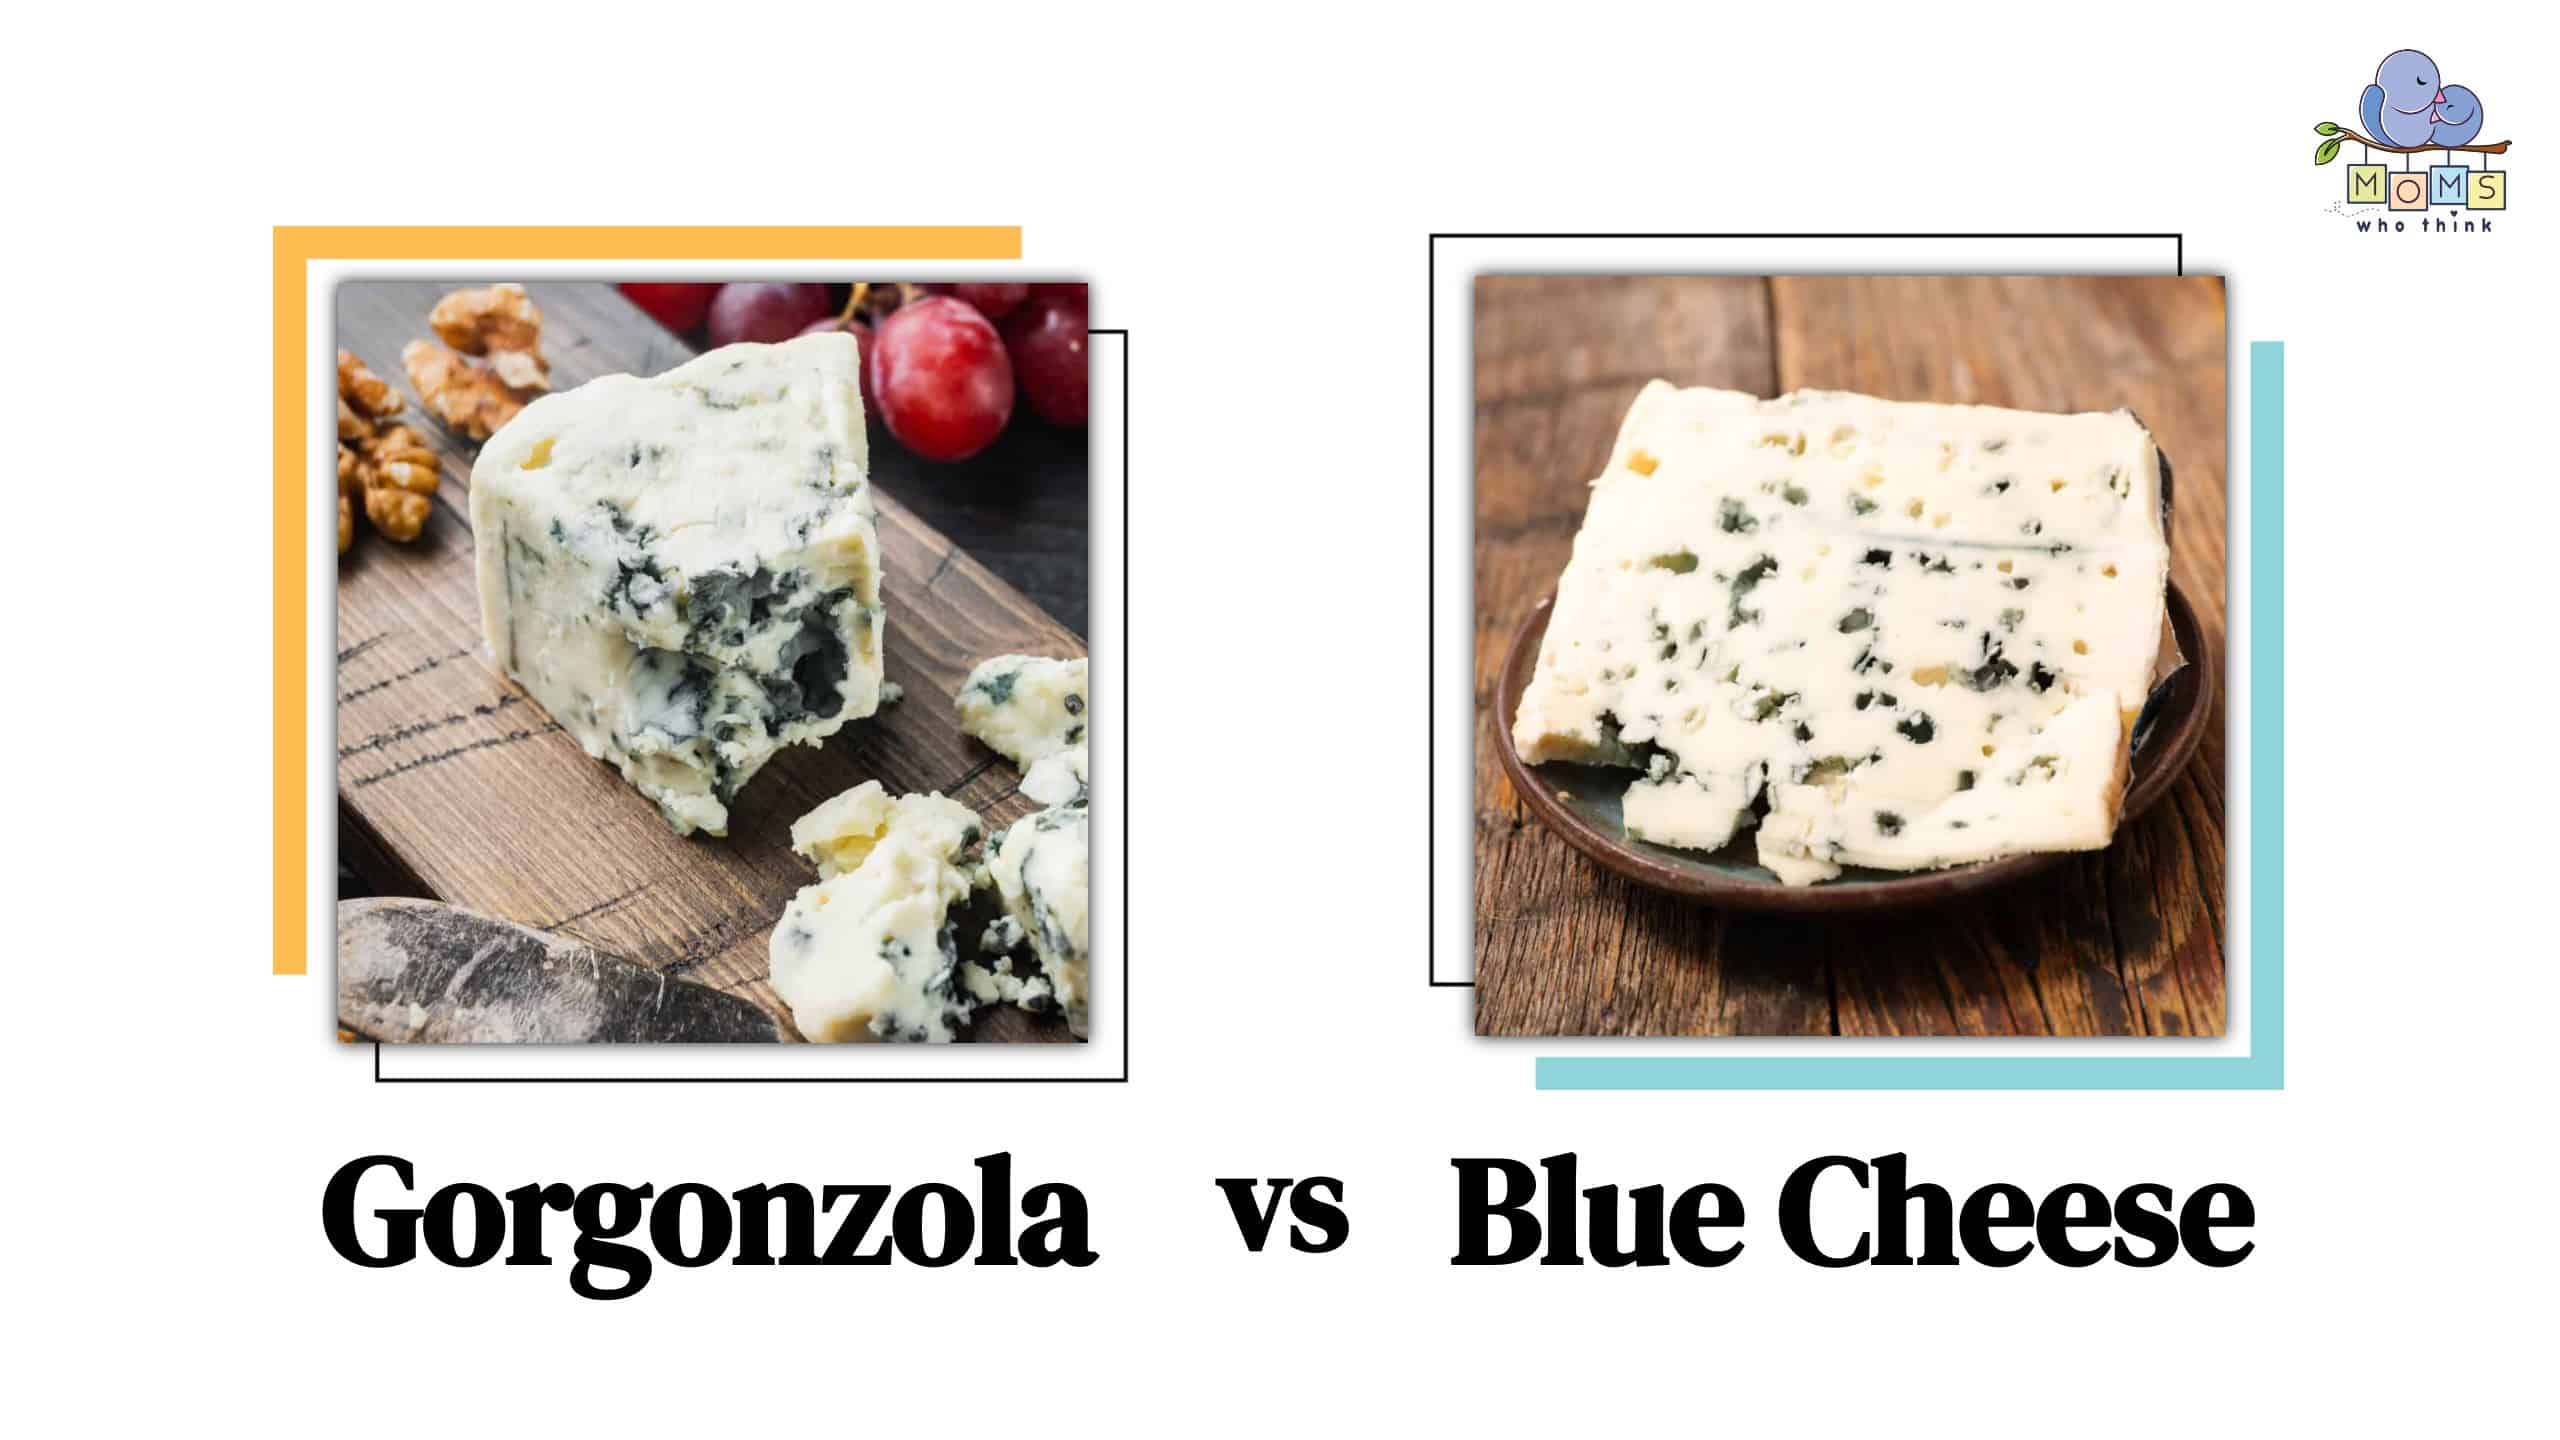 What Is Gorgonzola?